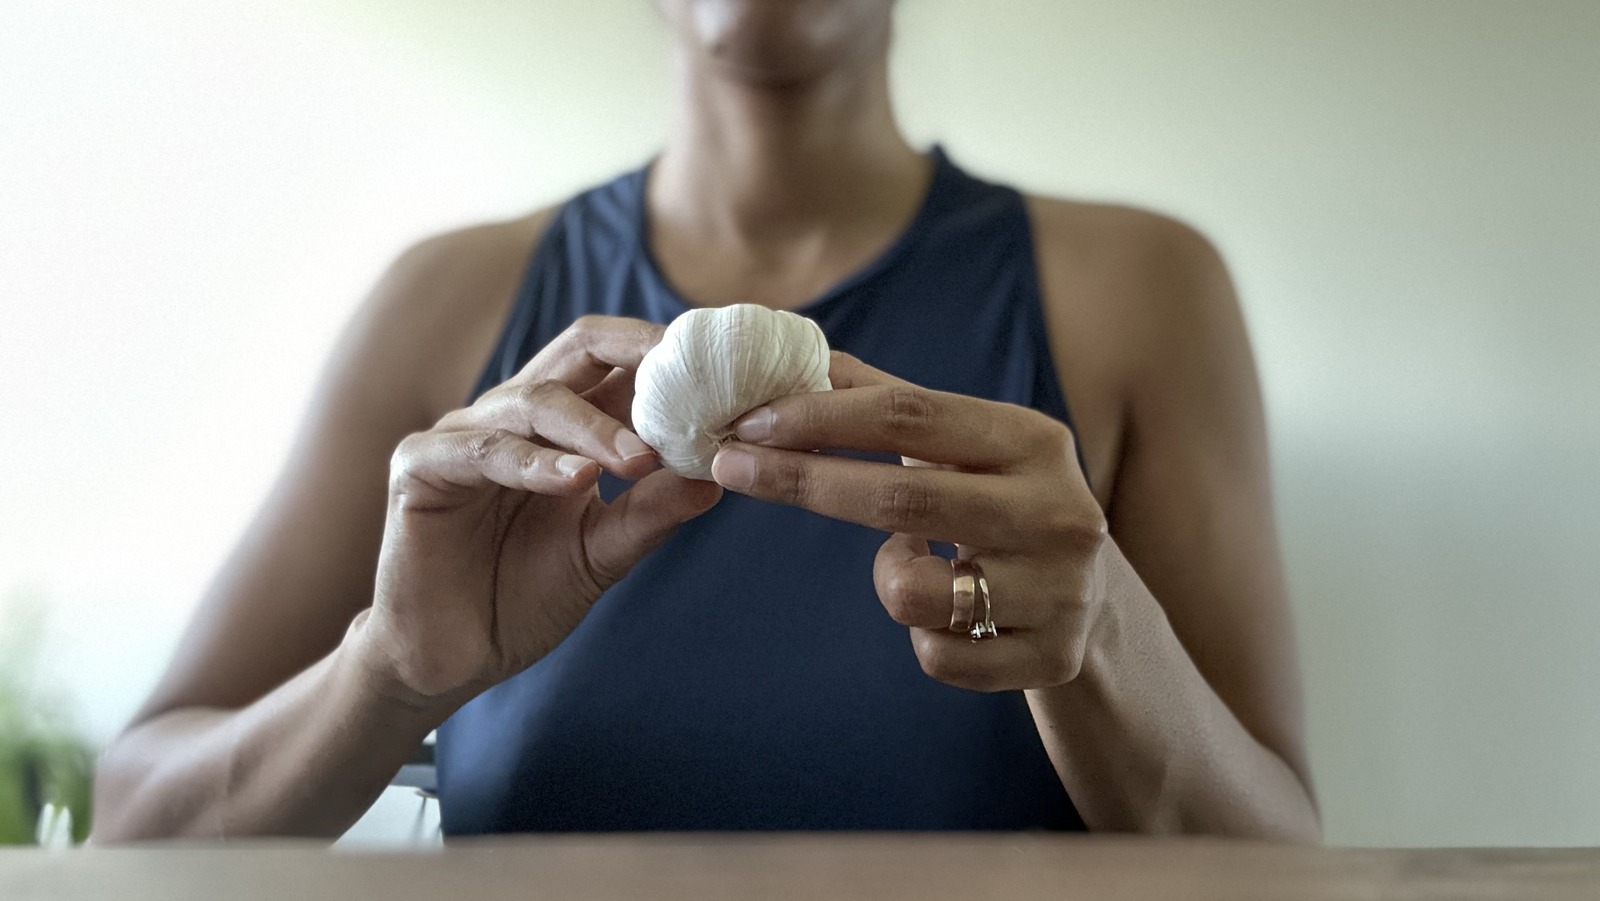 We Tried Rubbing Garlic All Over Our Feet Just Like Priyanka Chopra. Here's What Happened - Health Digest